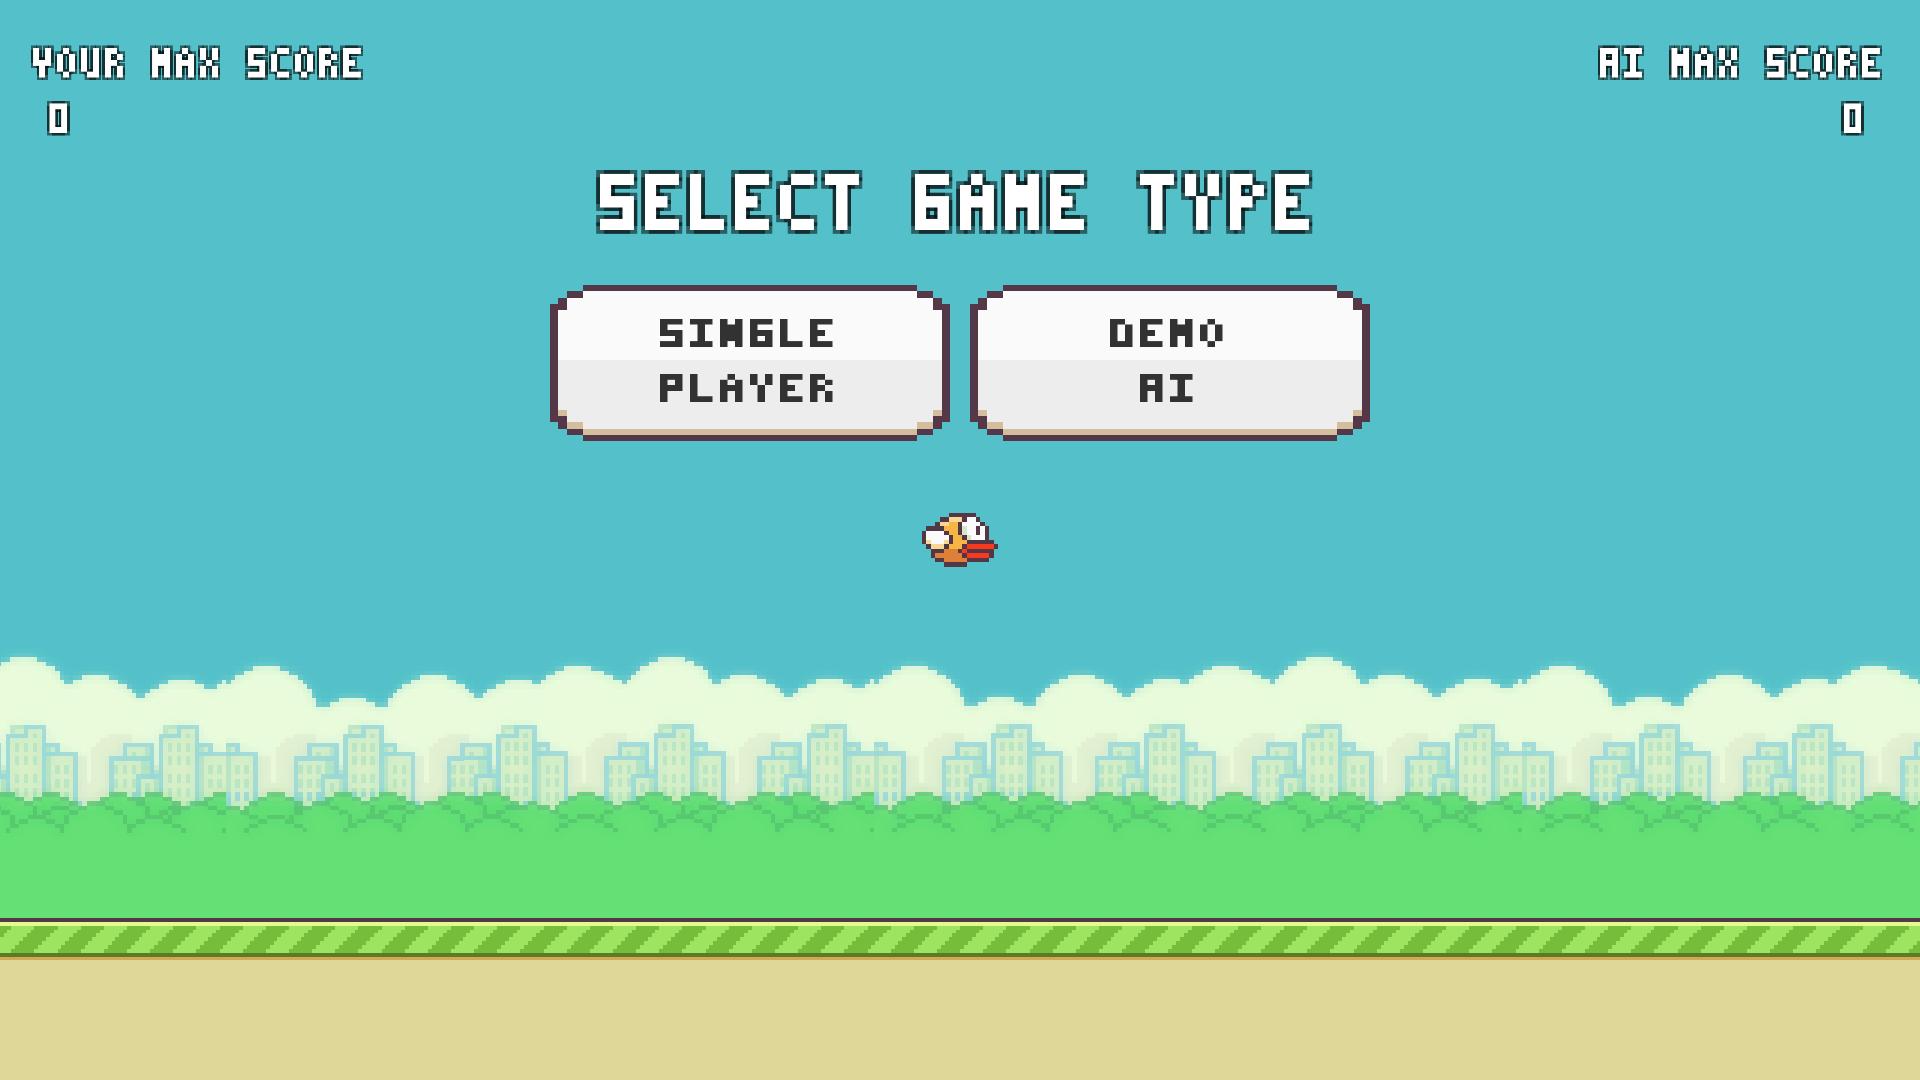 Flappai Bird: Single Player or AI - You Decide!